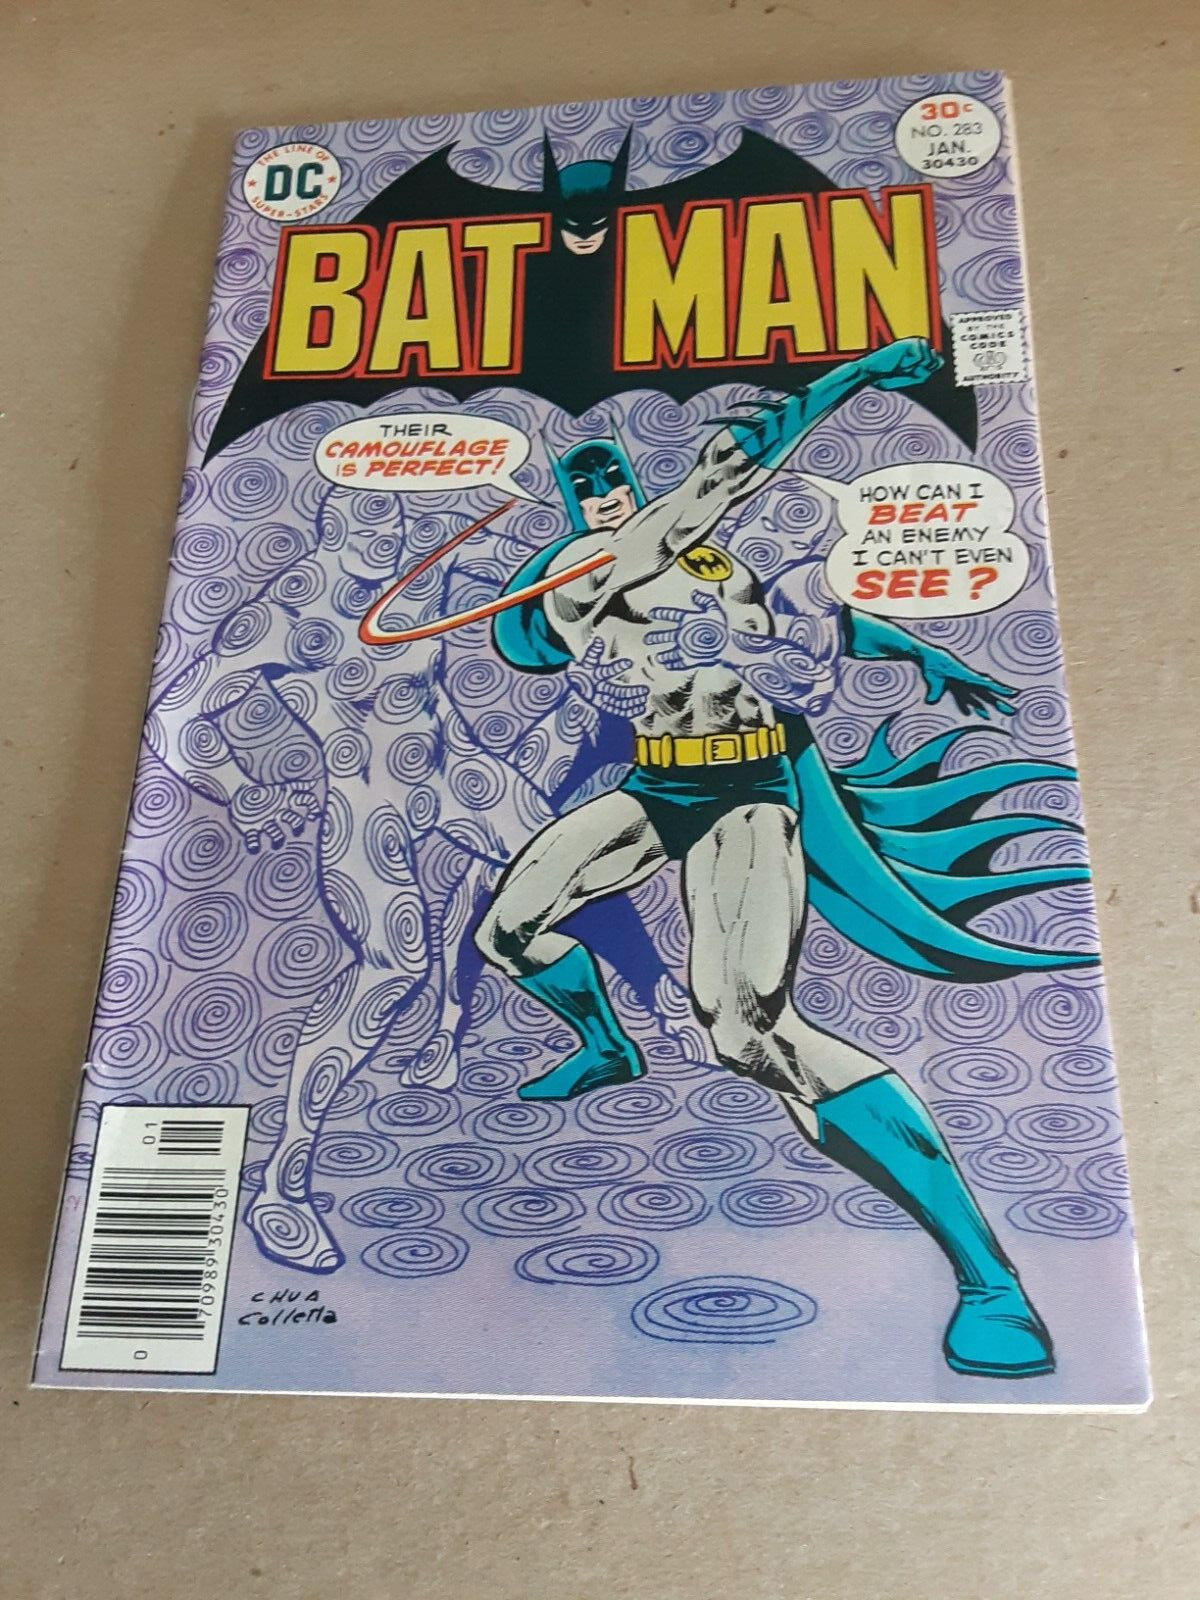 BATMAN #283 DC COMICS 1977 Regular Edition Attack of the Camouflage Twins